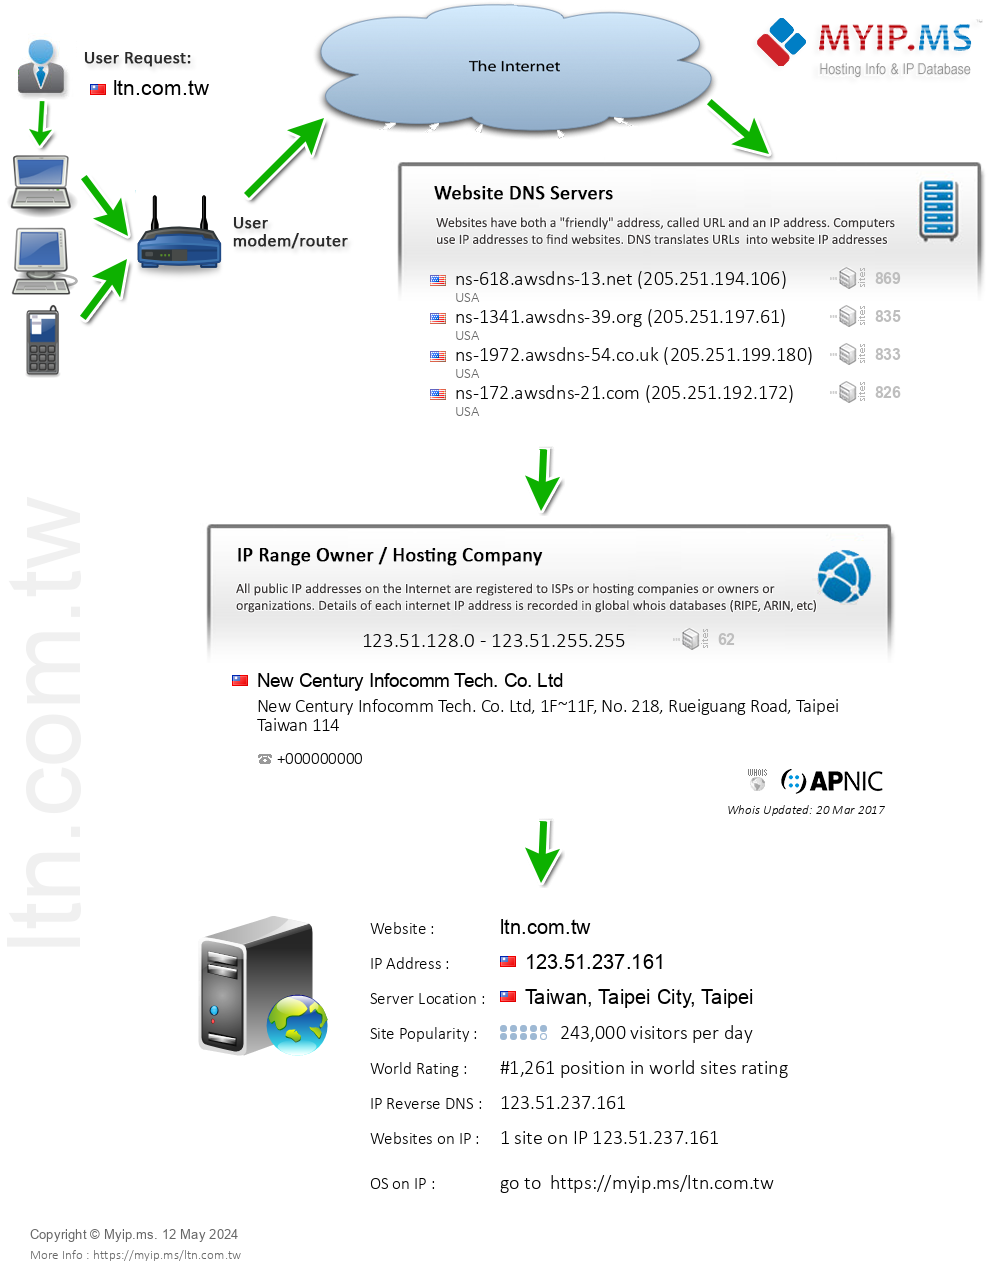 Ltn.com.tw - Website Hosting Visual IP Diagram